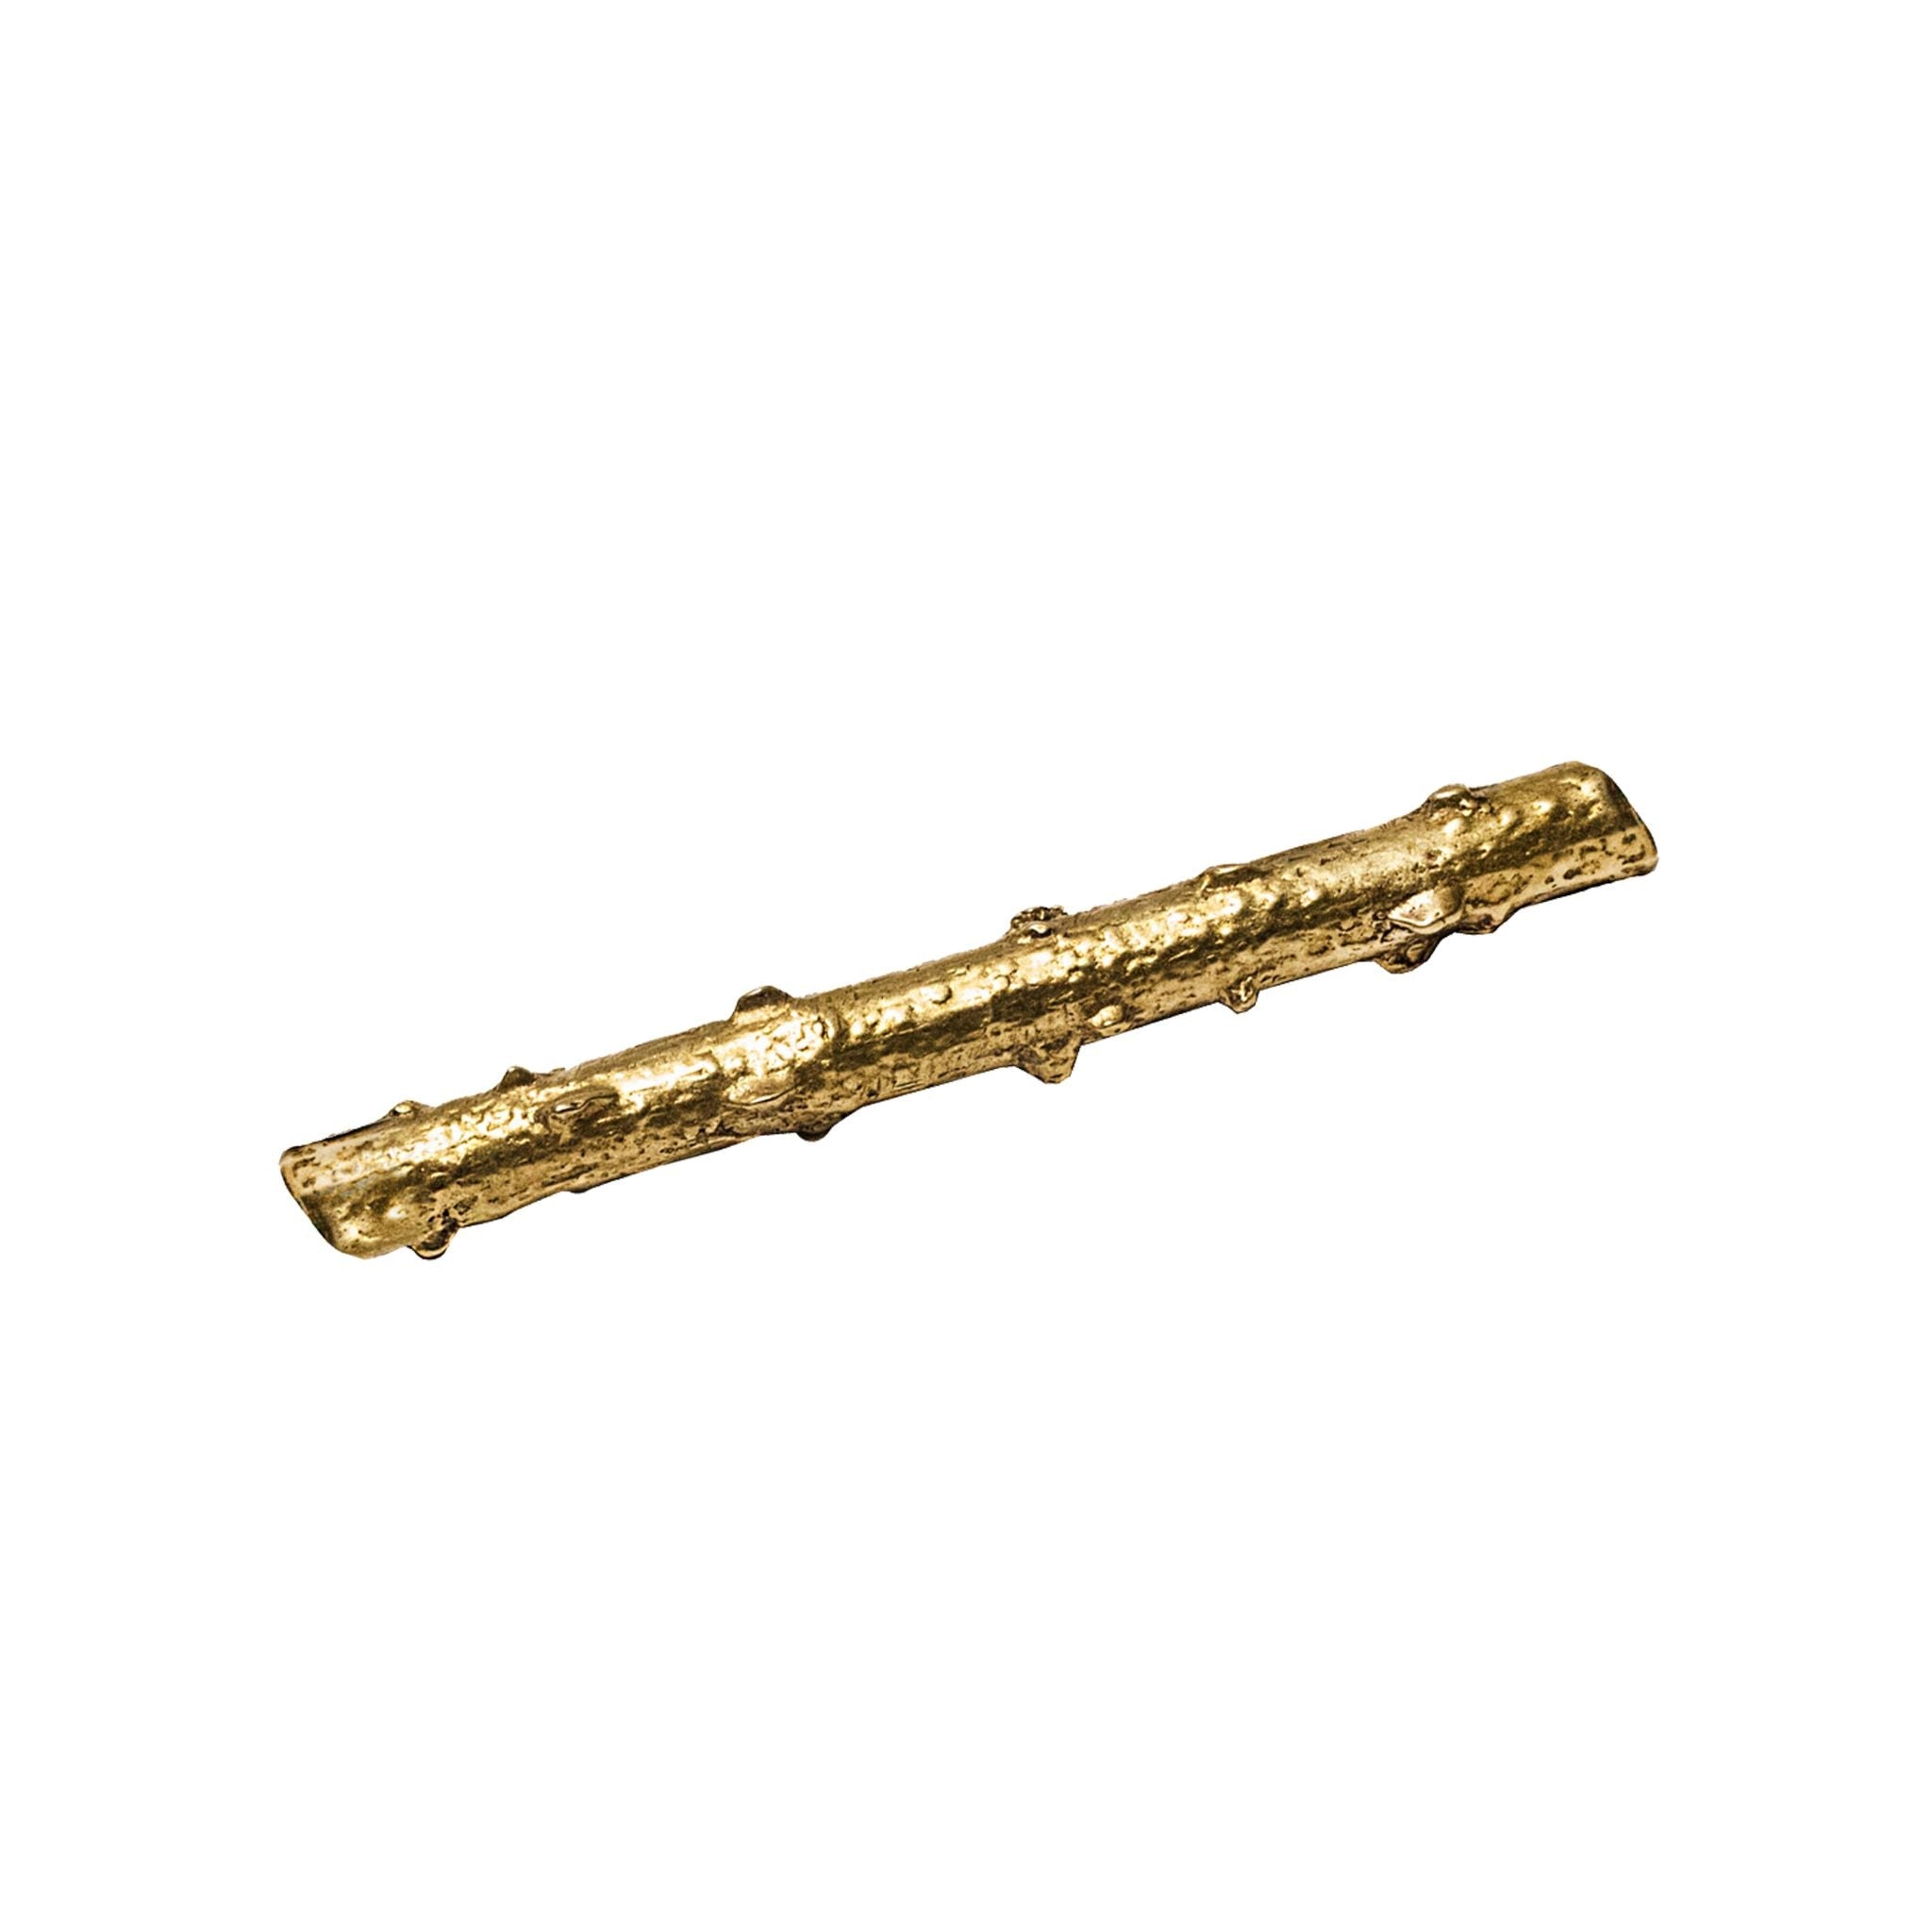 Chalet brass small rosehip branch knob - ilbronzetto